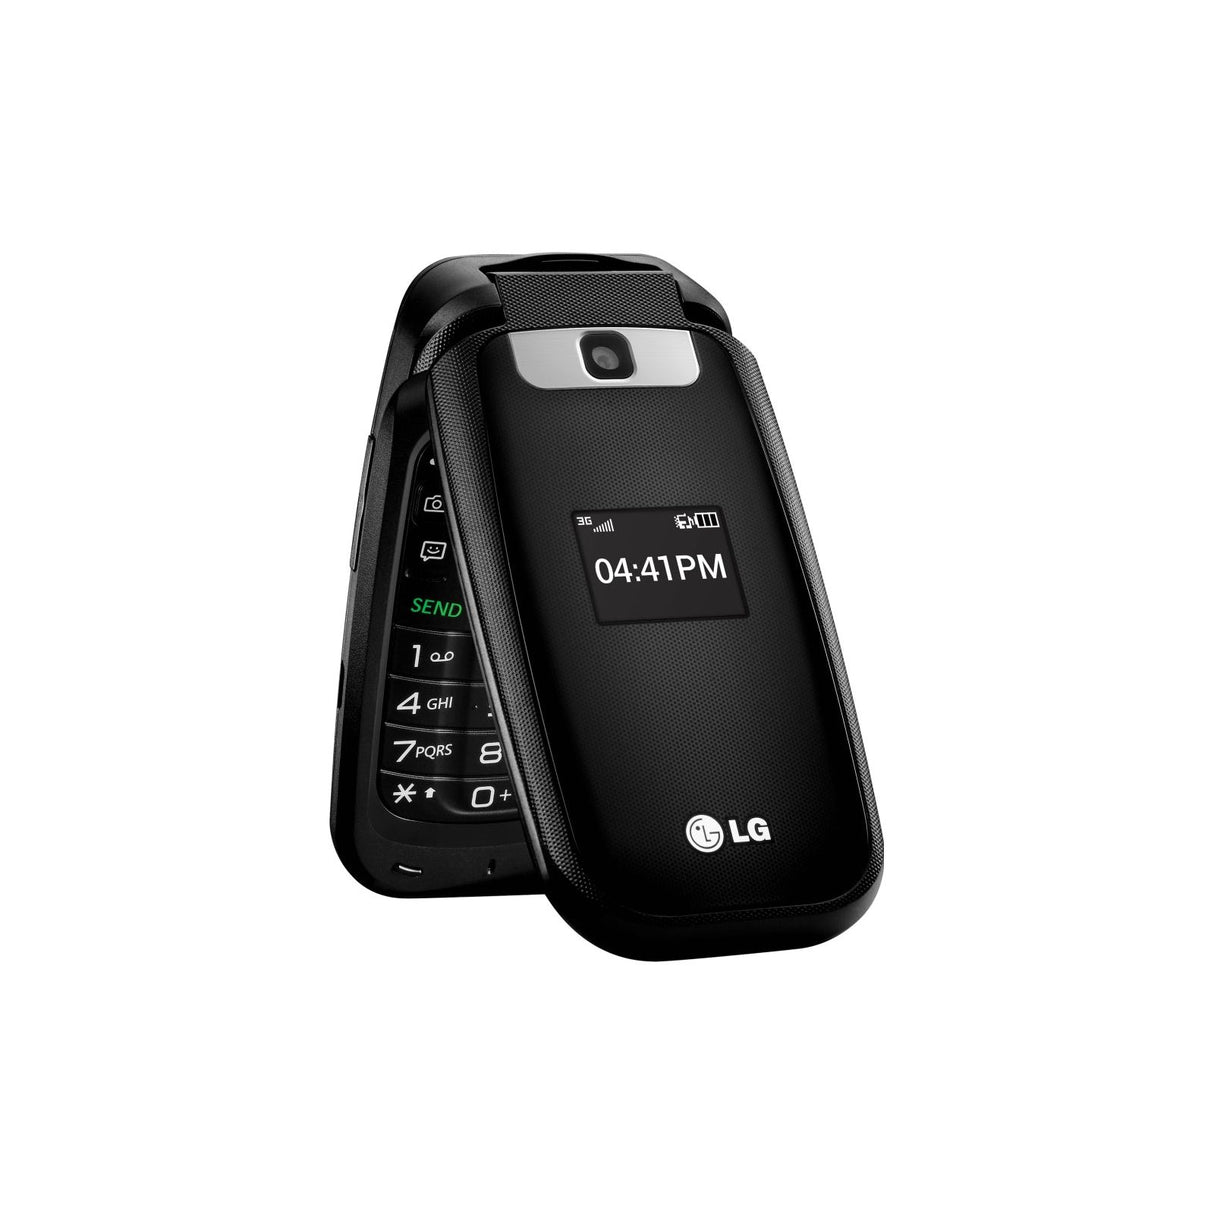 Net10 LG 440 Prepaid Cell Phone